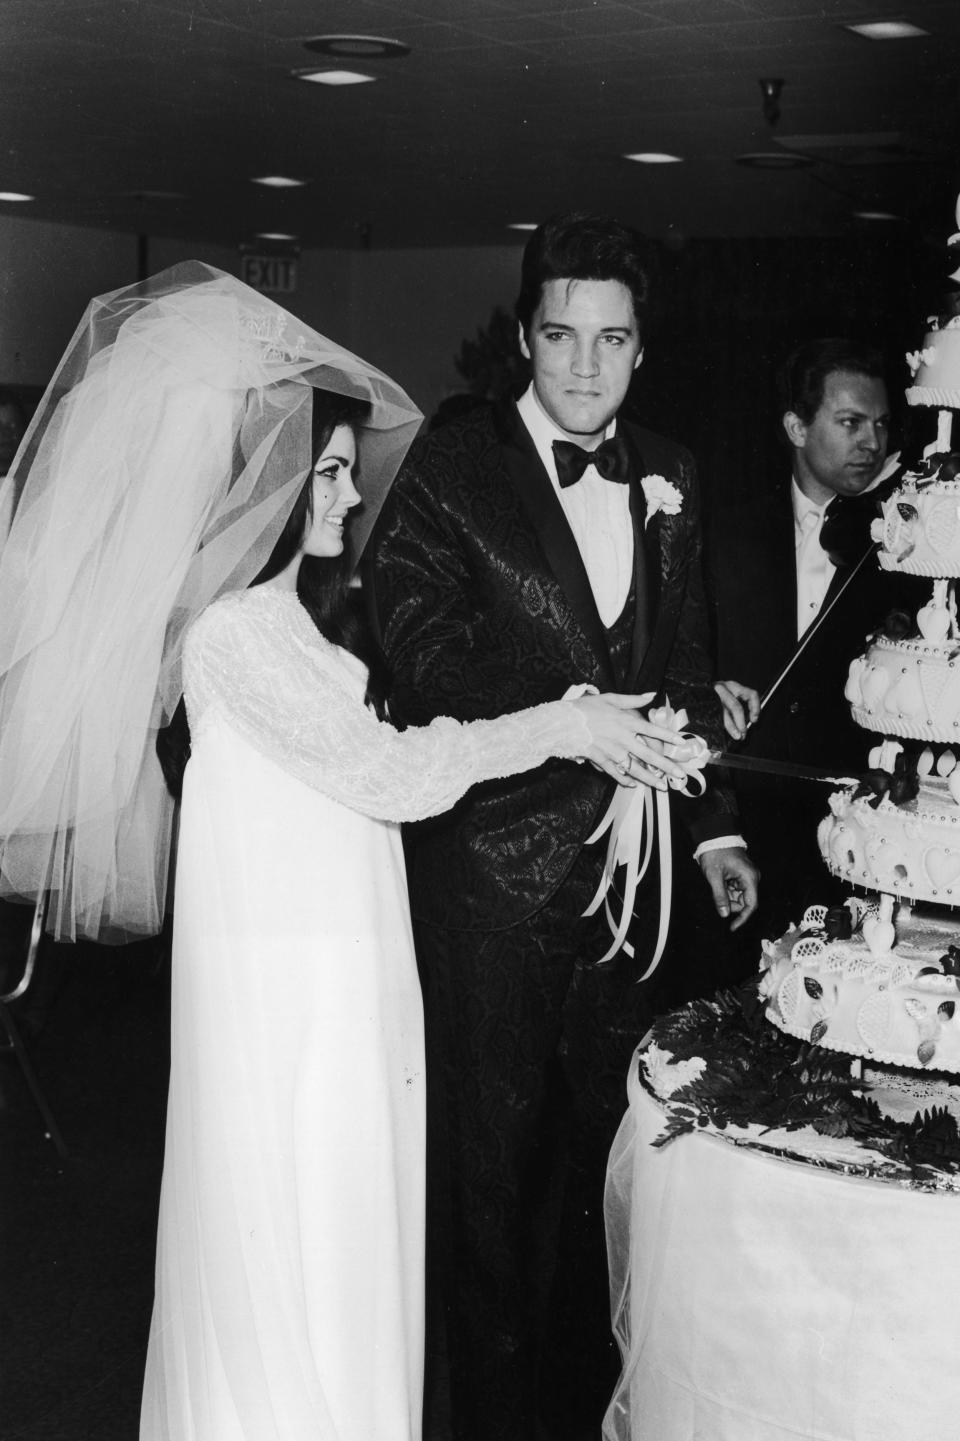 WATCH: Priscilla Presley on Why She Divorced Elvis Presley